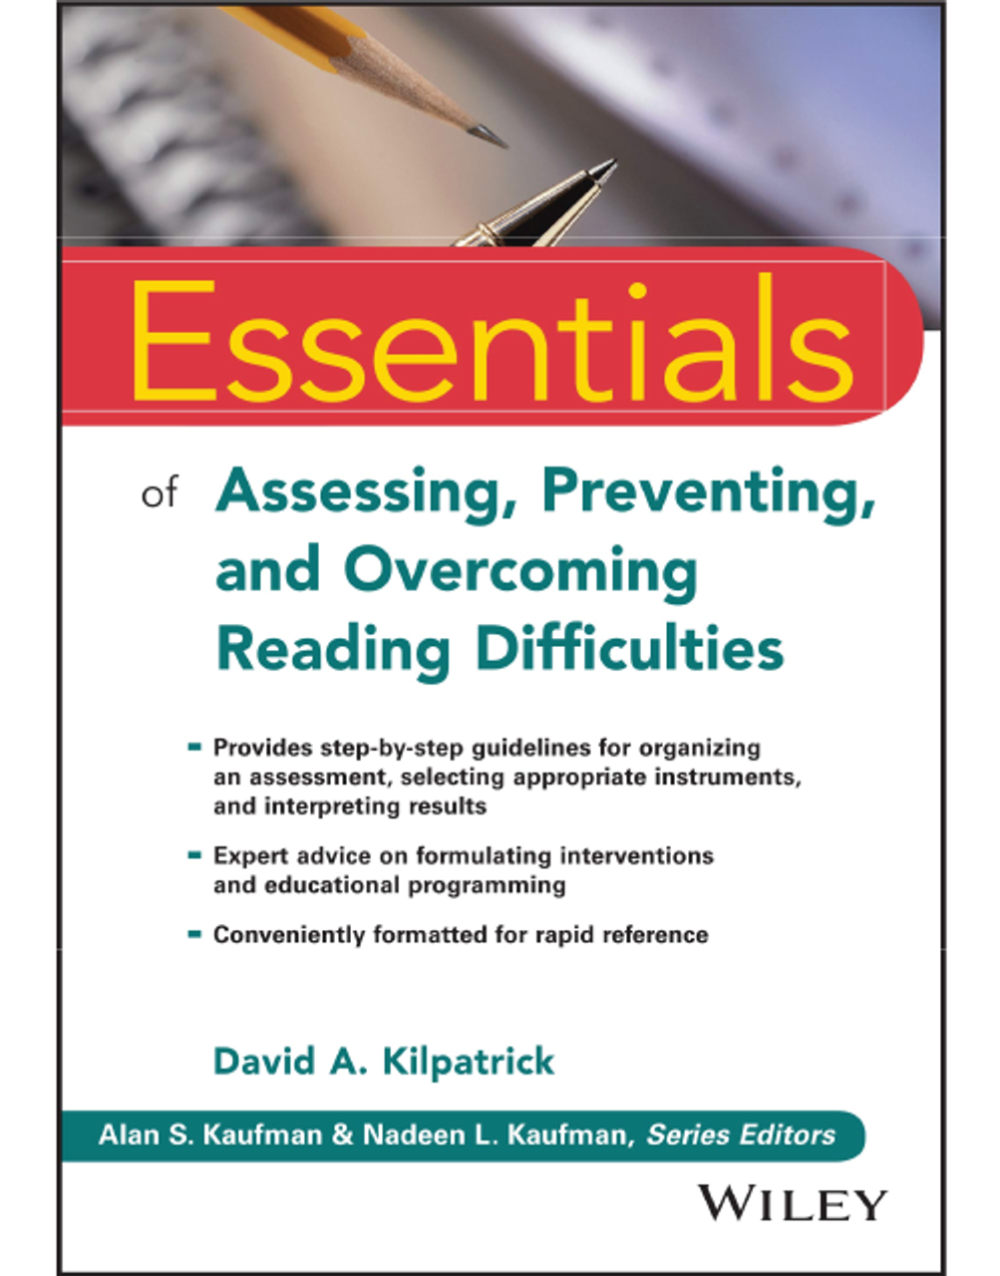 Essentials of Assessing, Preventing